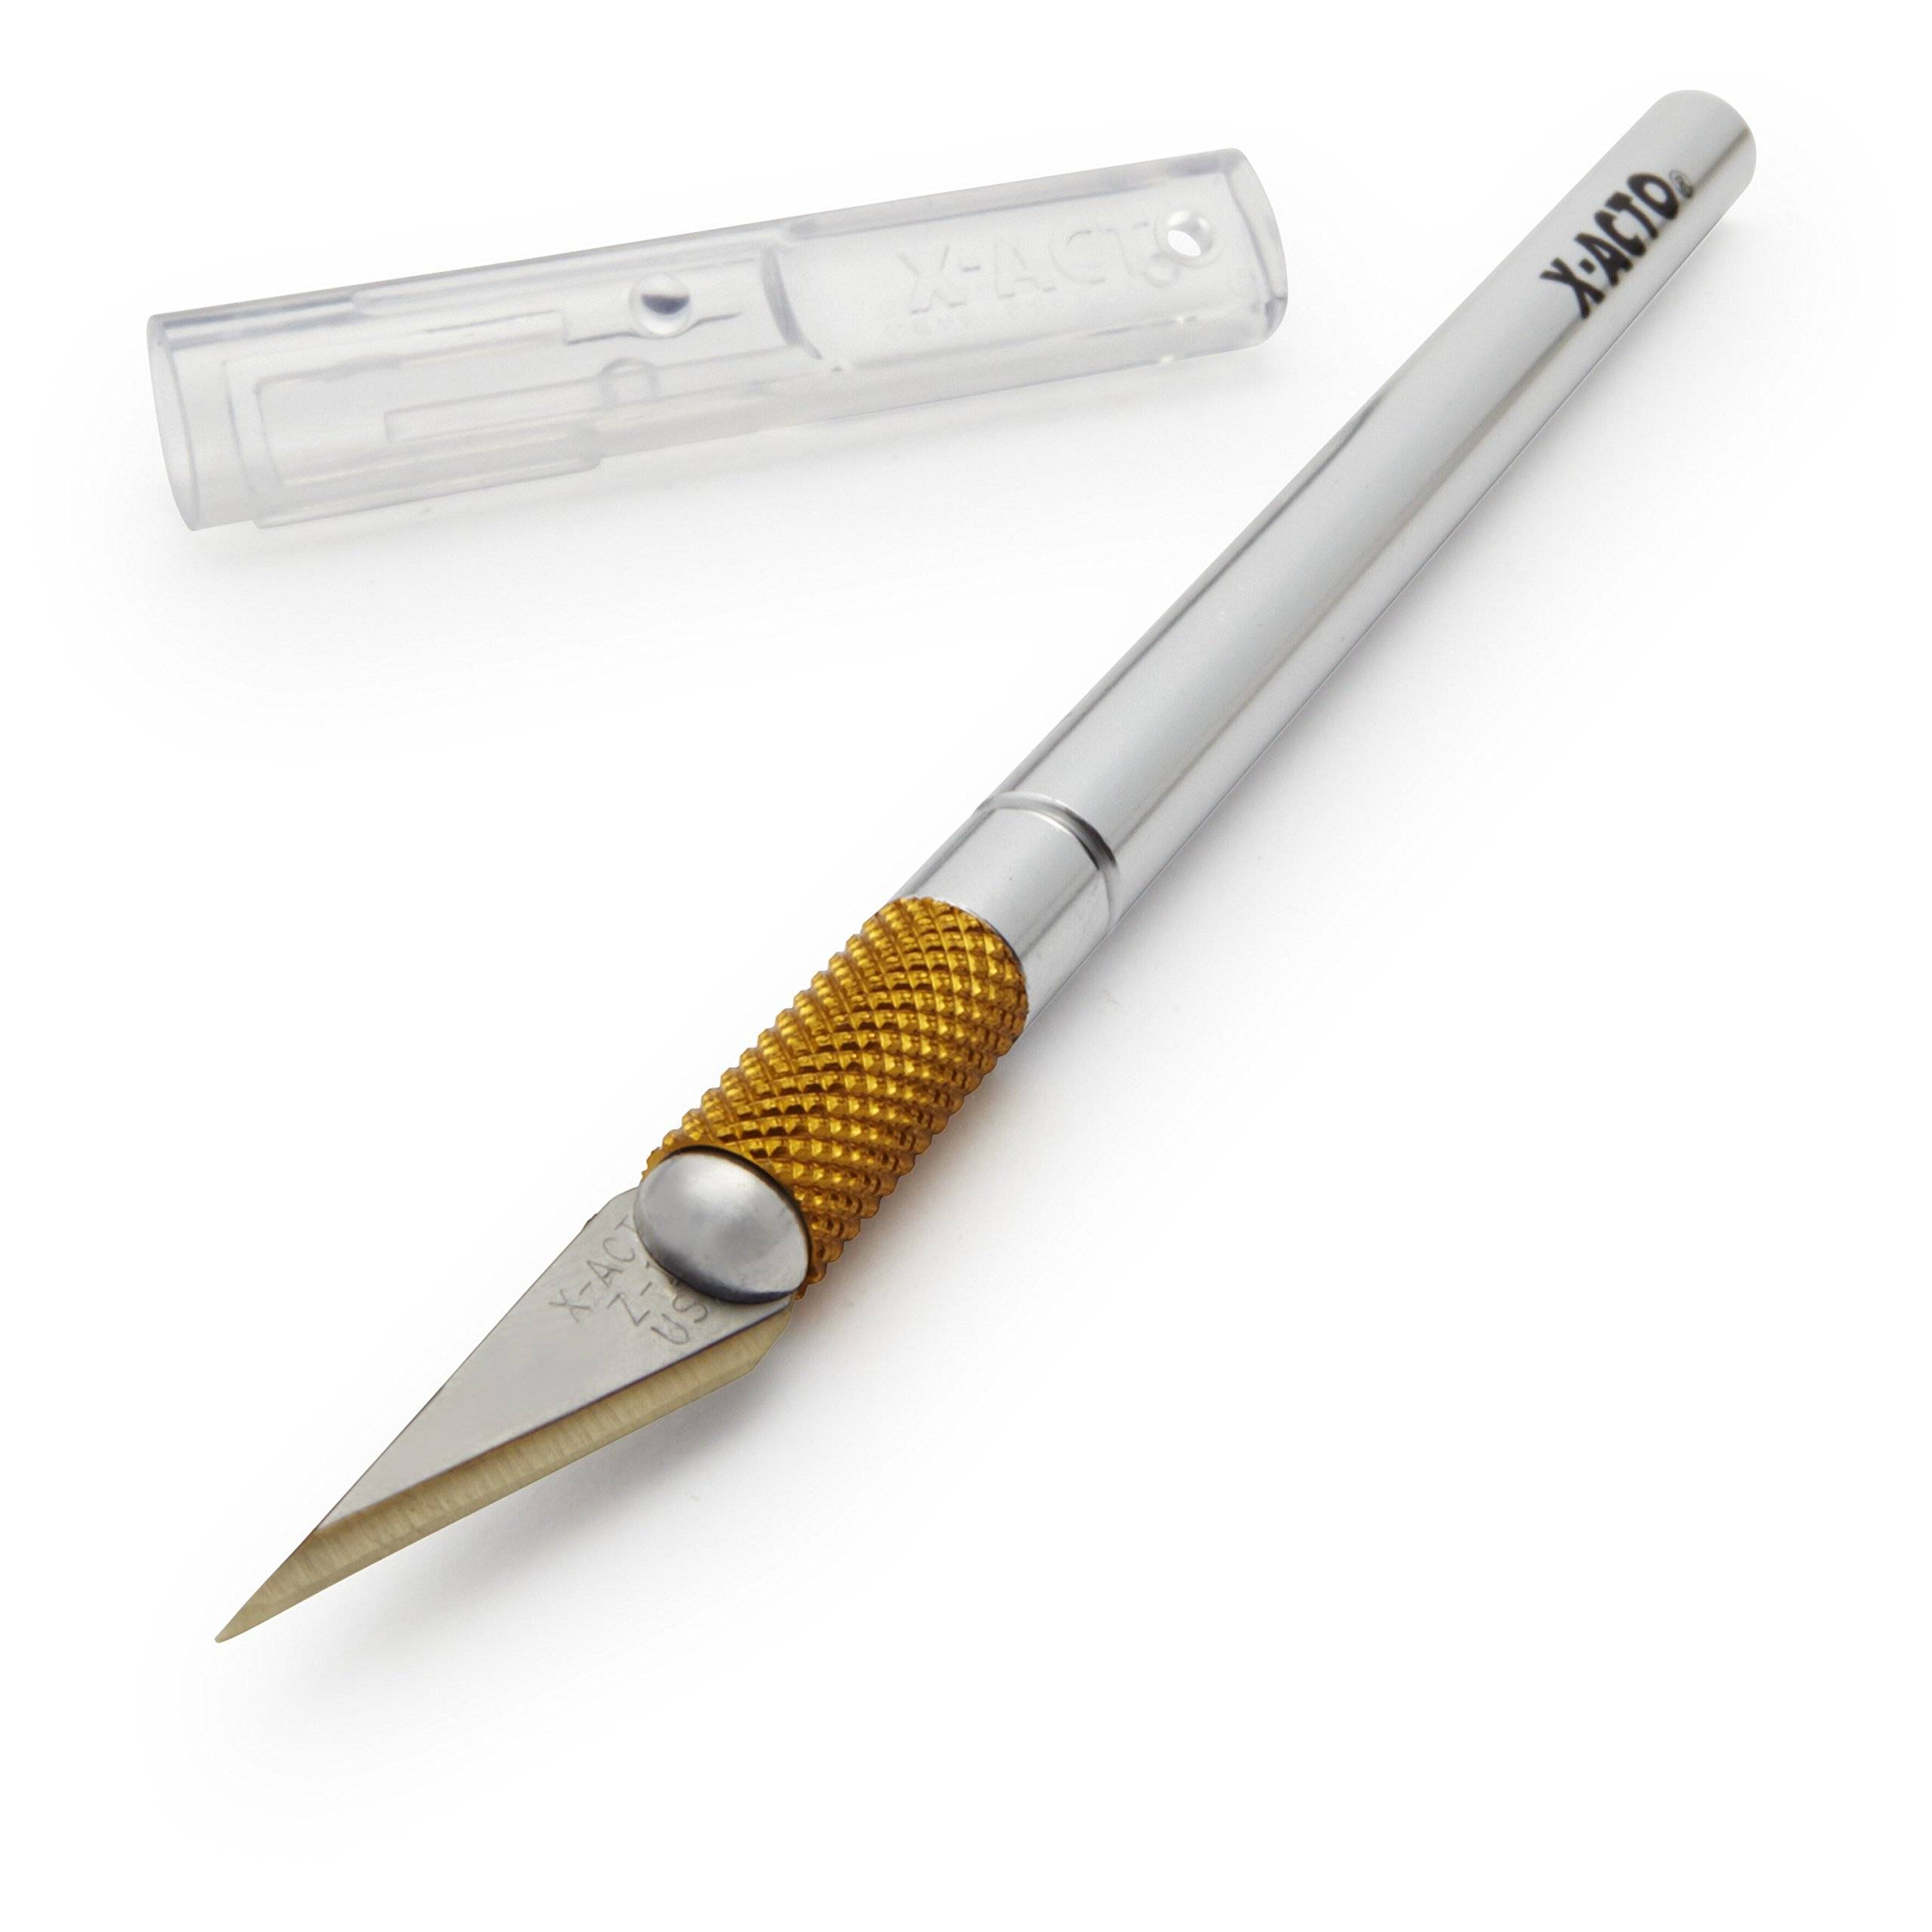 Trqmwypklx9uqm - roblox knife pen